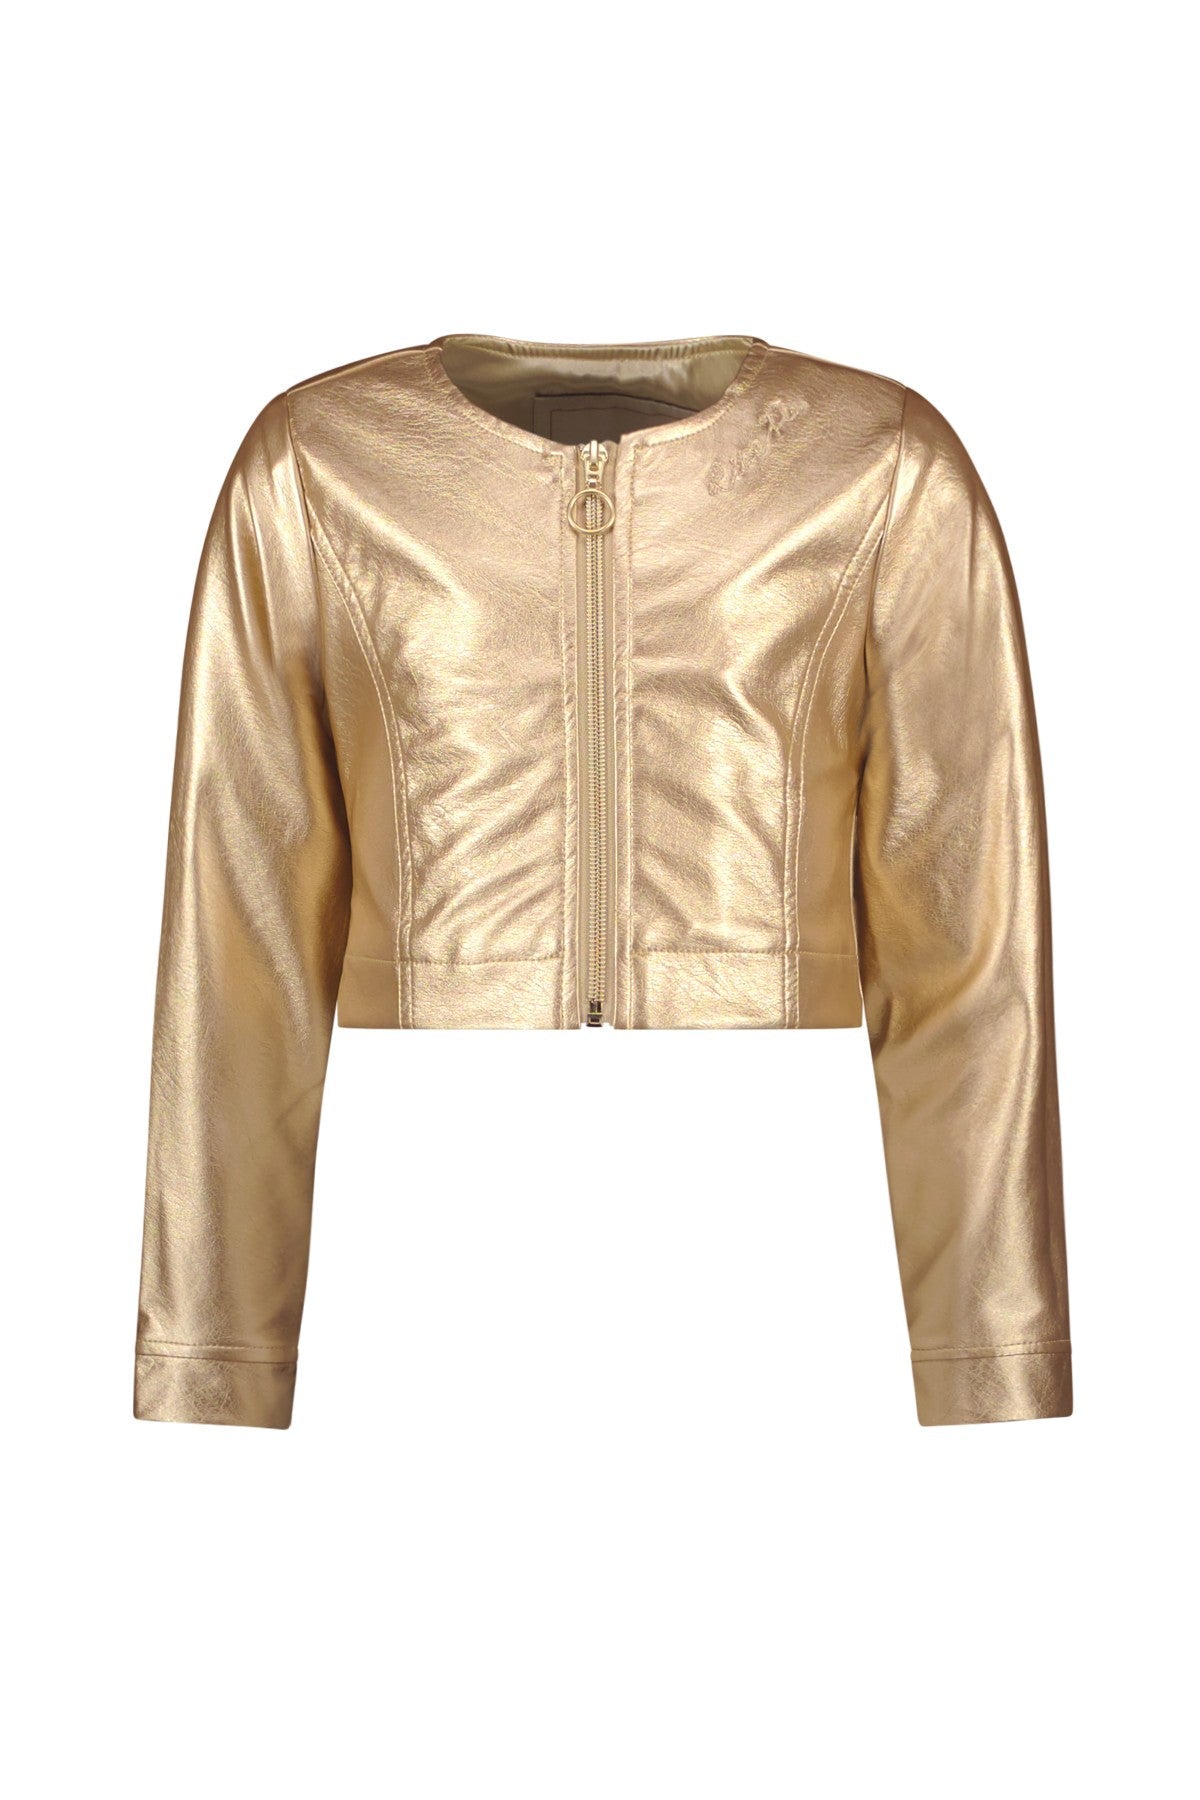 Meisjes Imi Leather Jacket No Collar van Like Flo in de kleur Gold in maat 140.